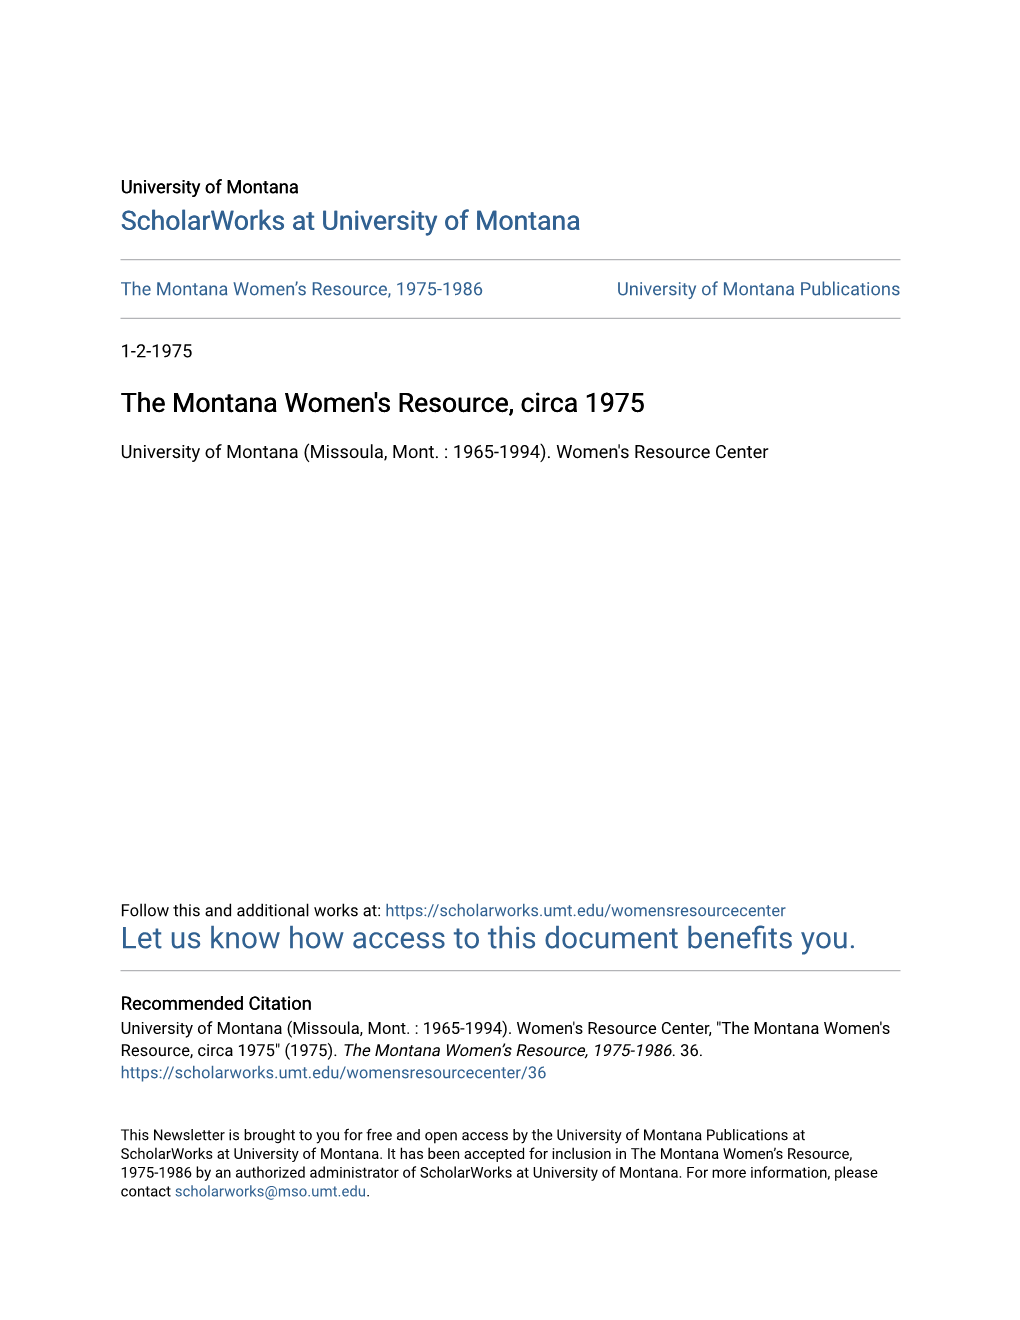 The Montana Women's Resource, Circa 1975